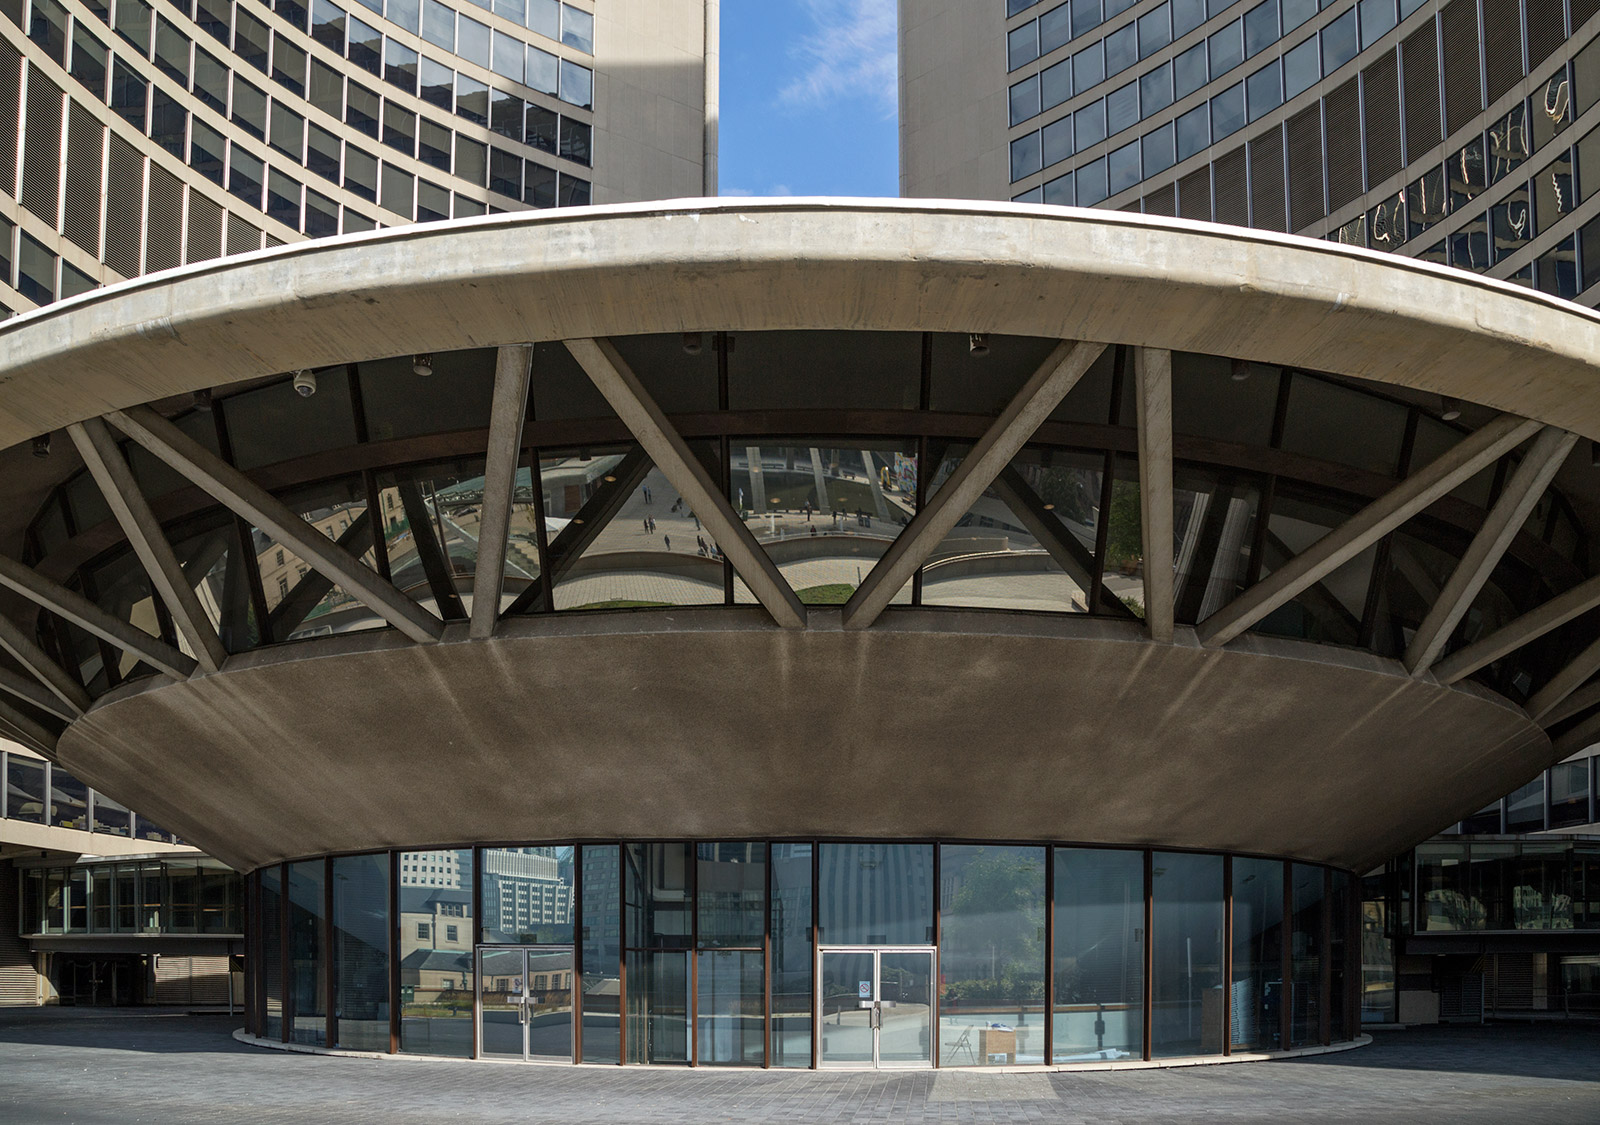 20140917. Architect Viljo Revell's concrete saucer at Toronto Ci